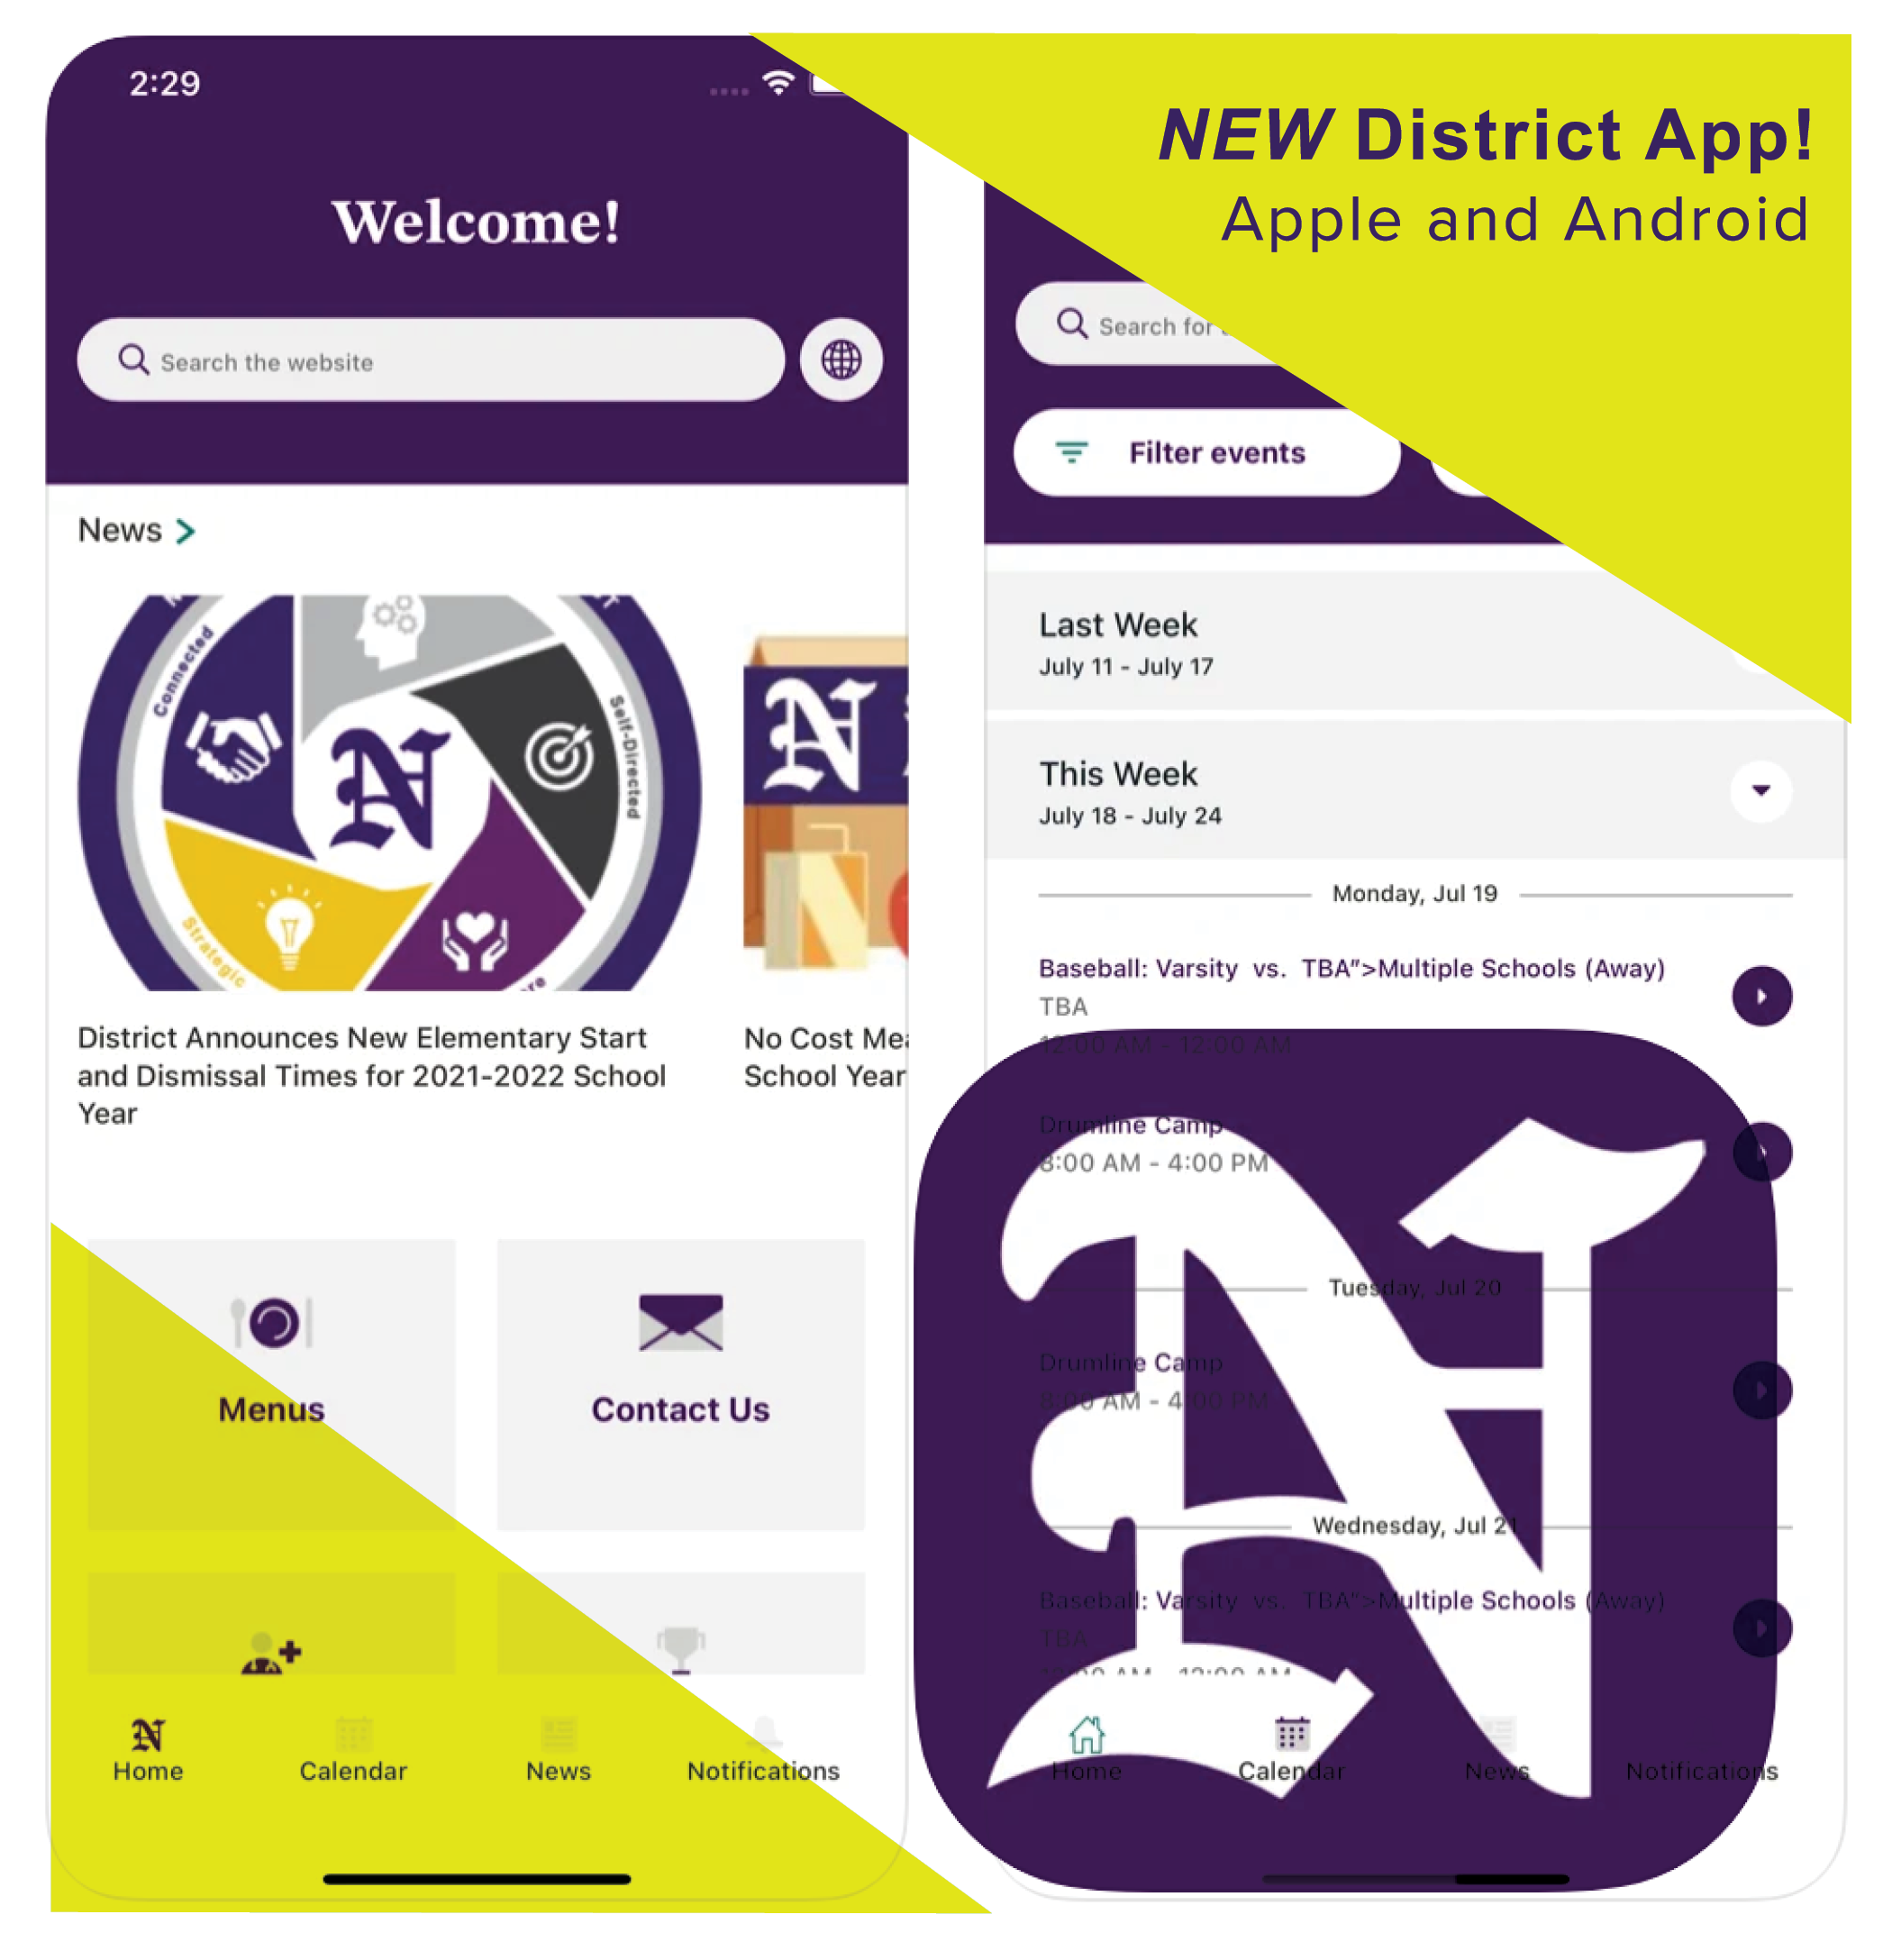 Official District Calendar - Norwalk Public Schools